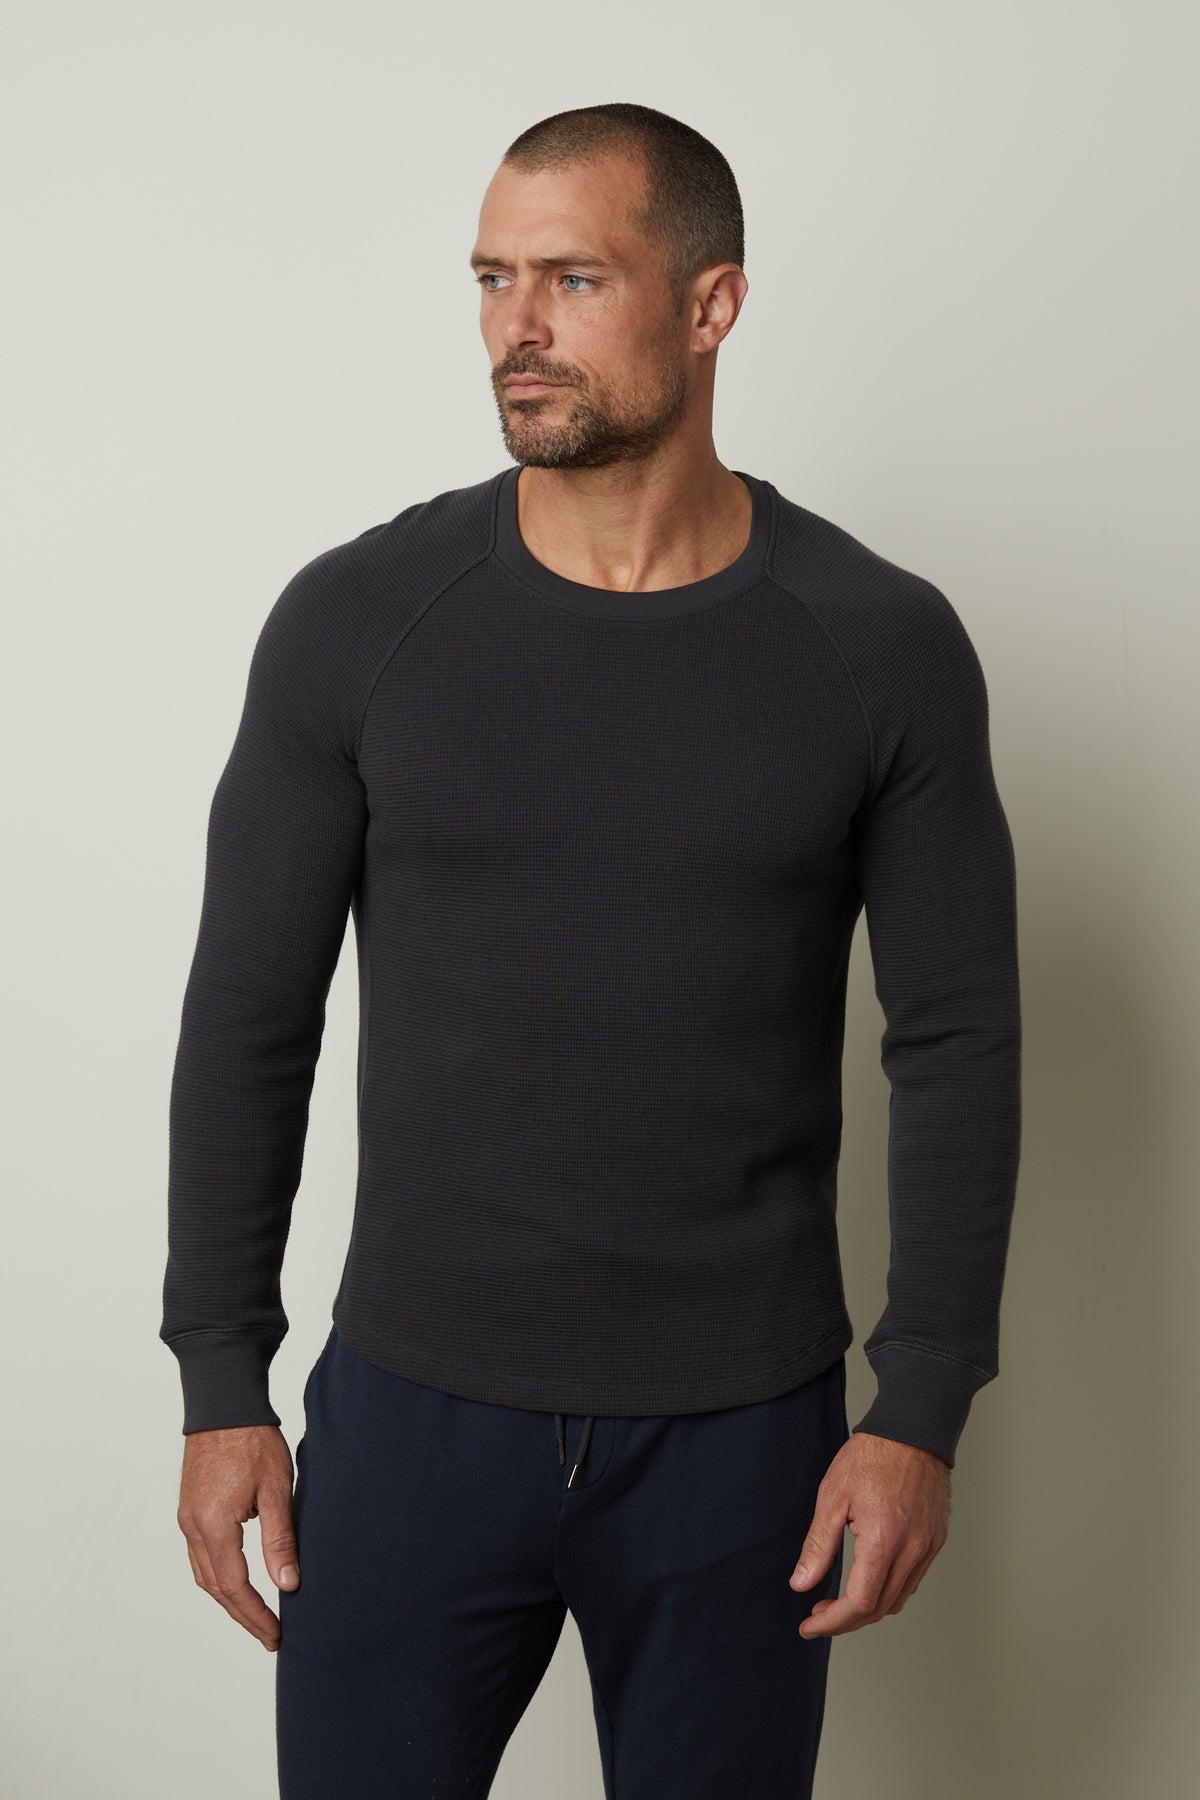   A man wearing a Velvet by Graham & Spencer black sweatshirt, comfortable fit. 